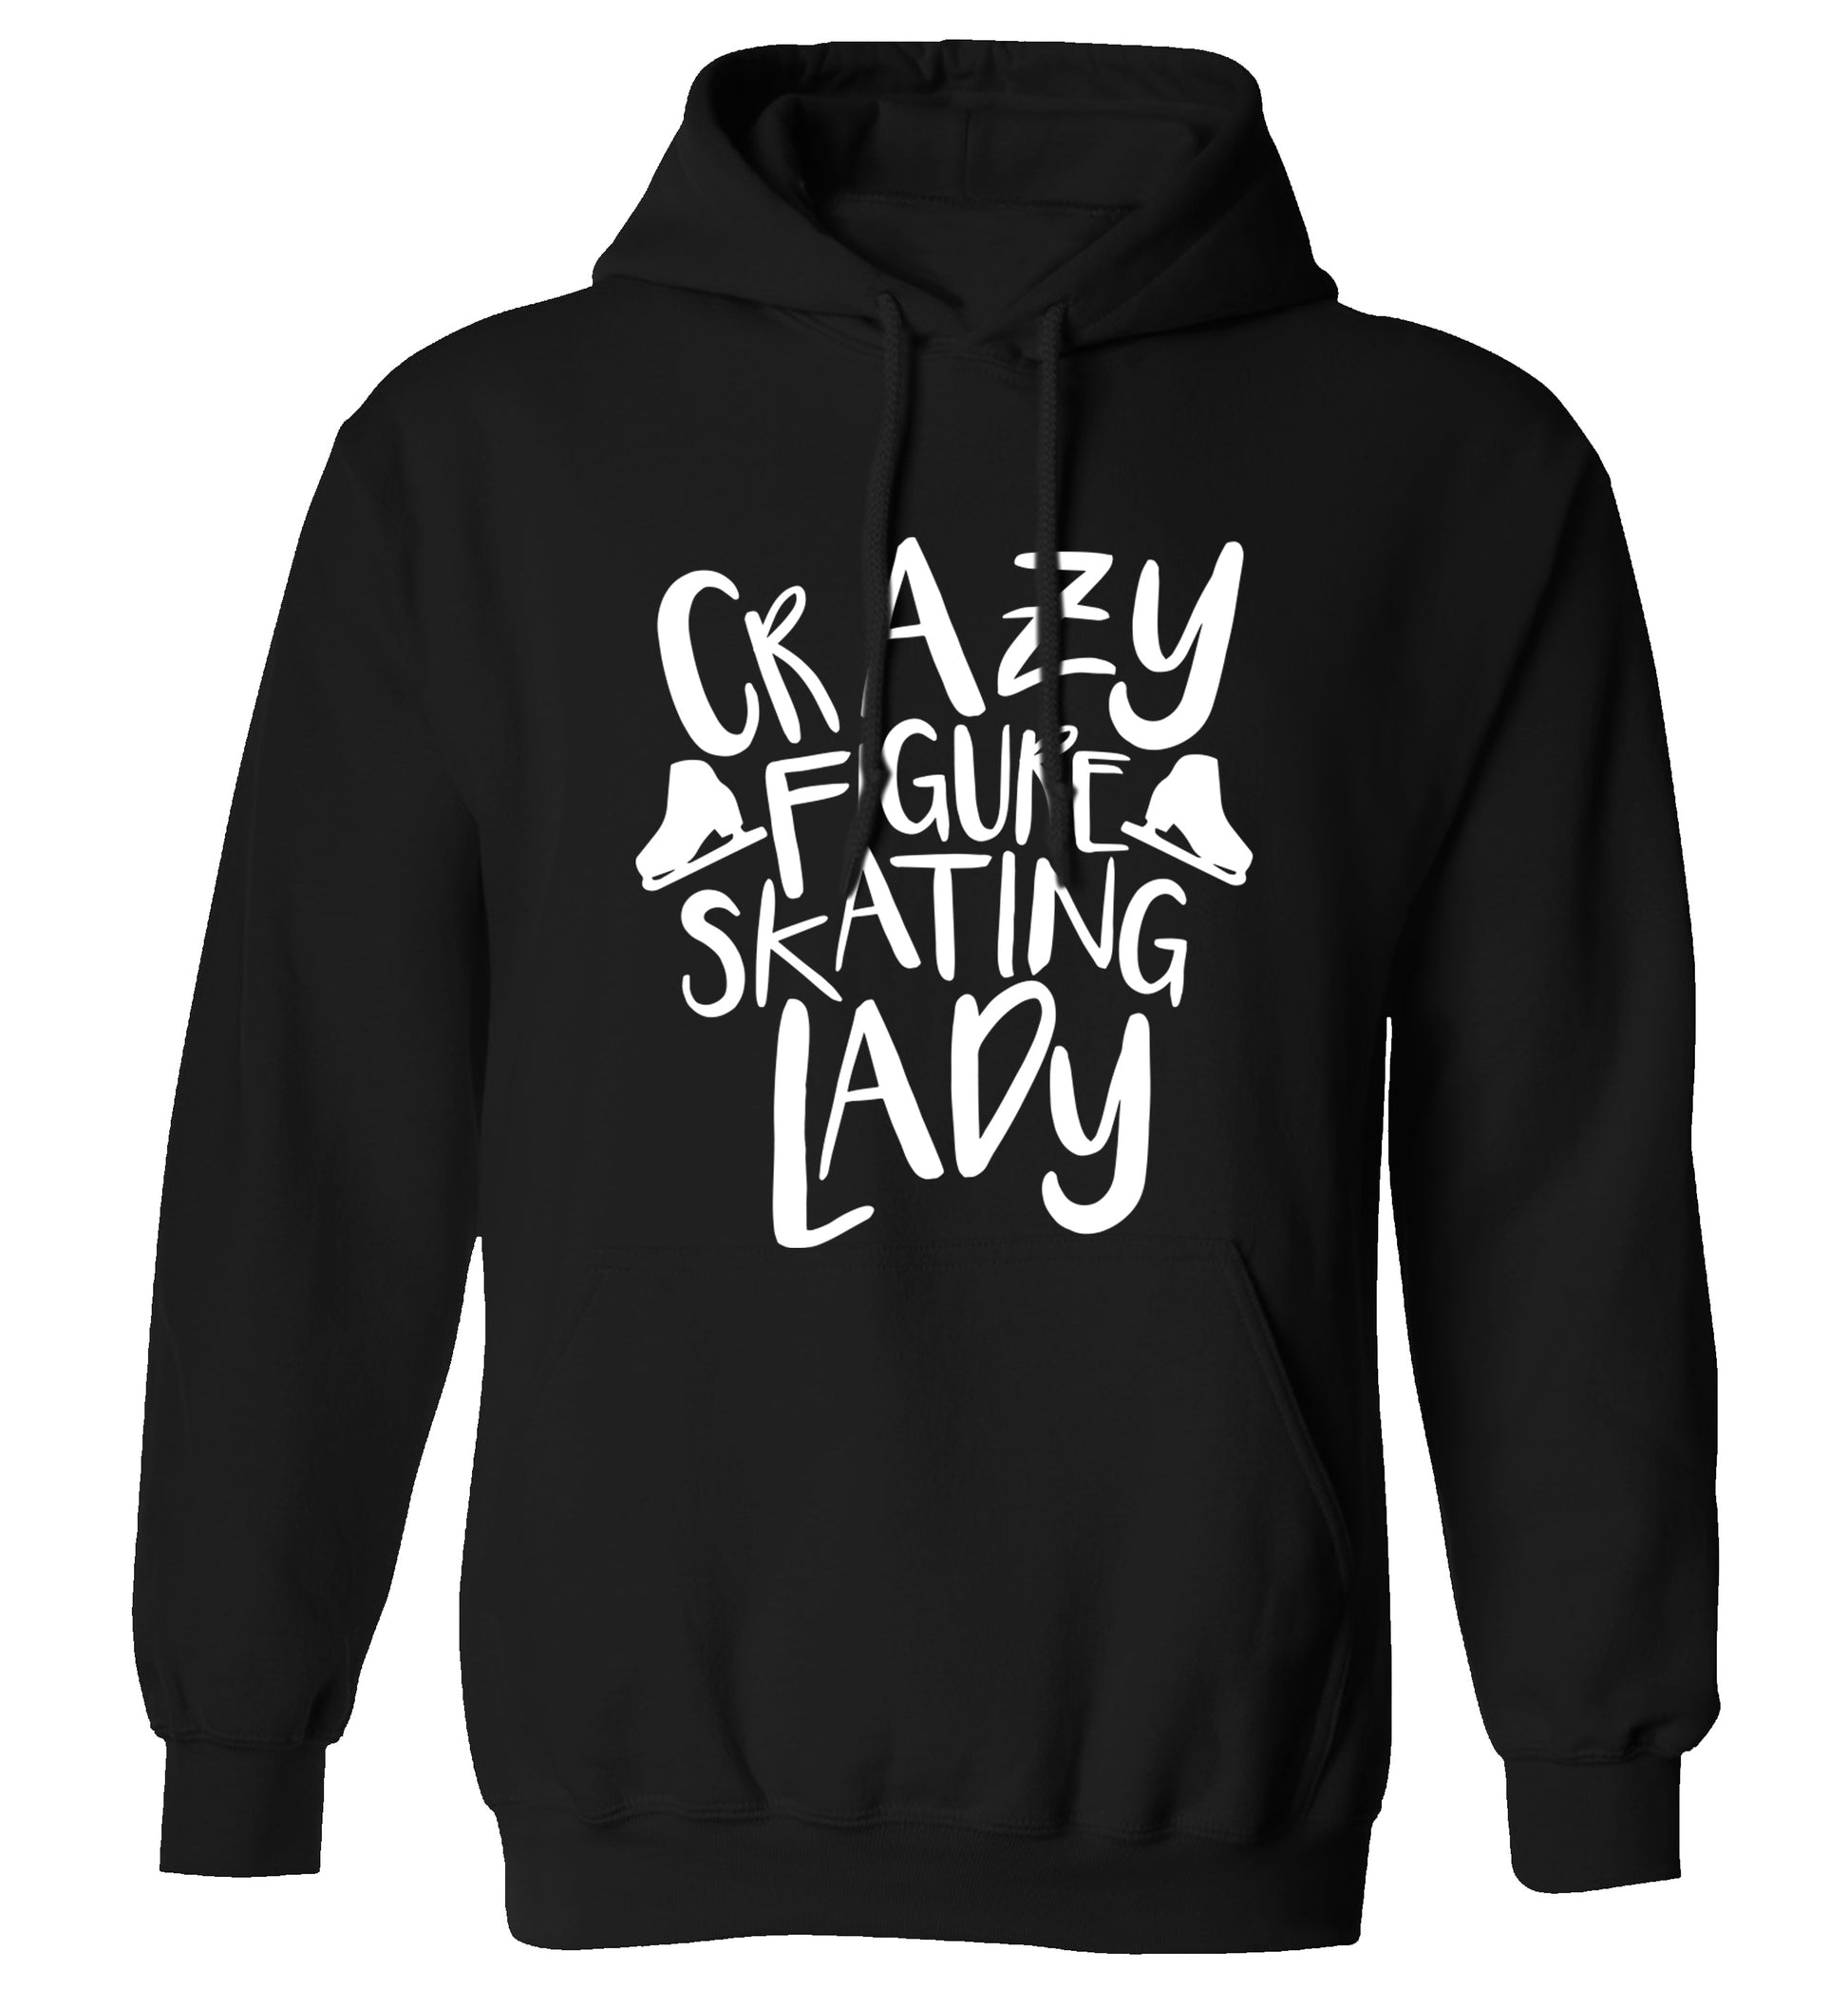 Crazy figure skating lady adults unisexblack hoodie 2XL